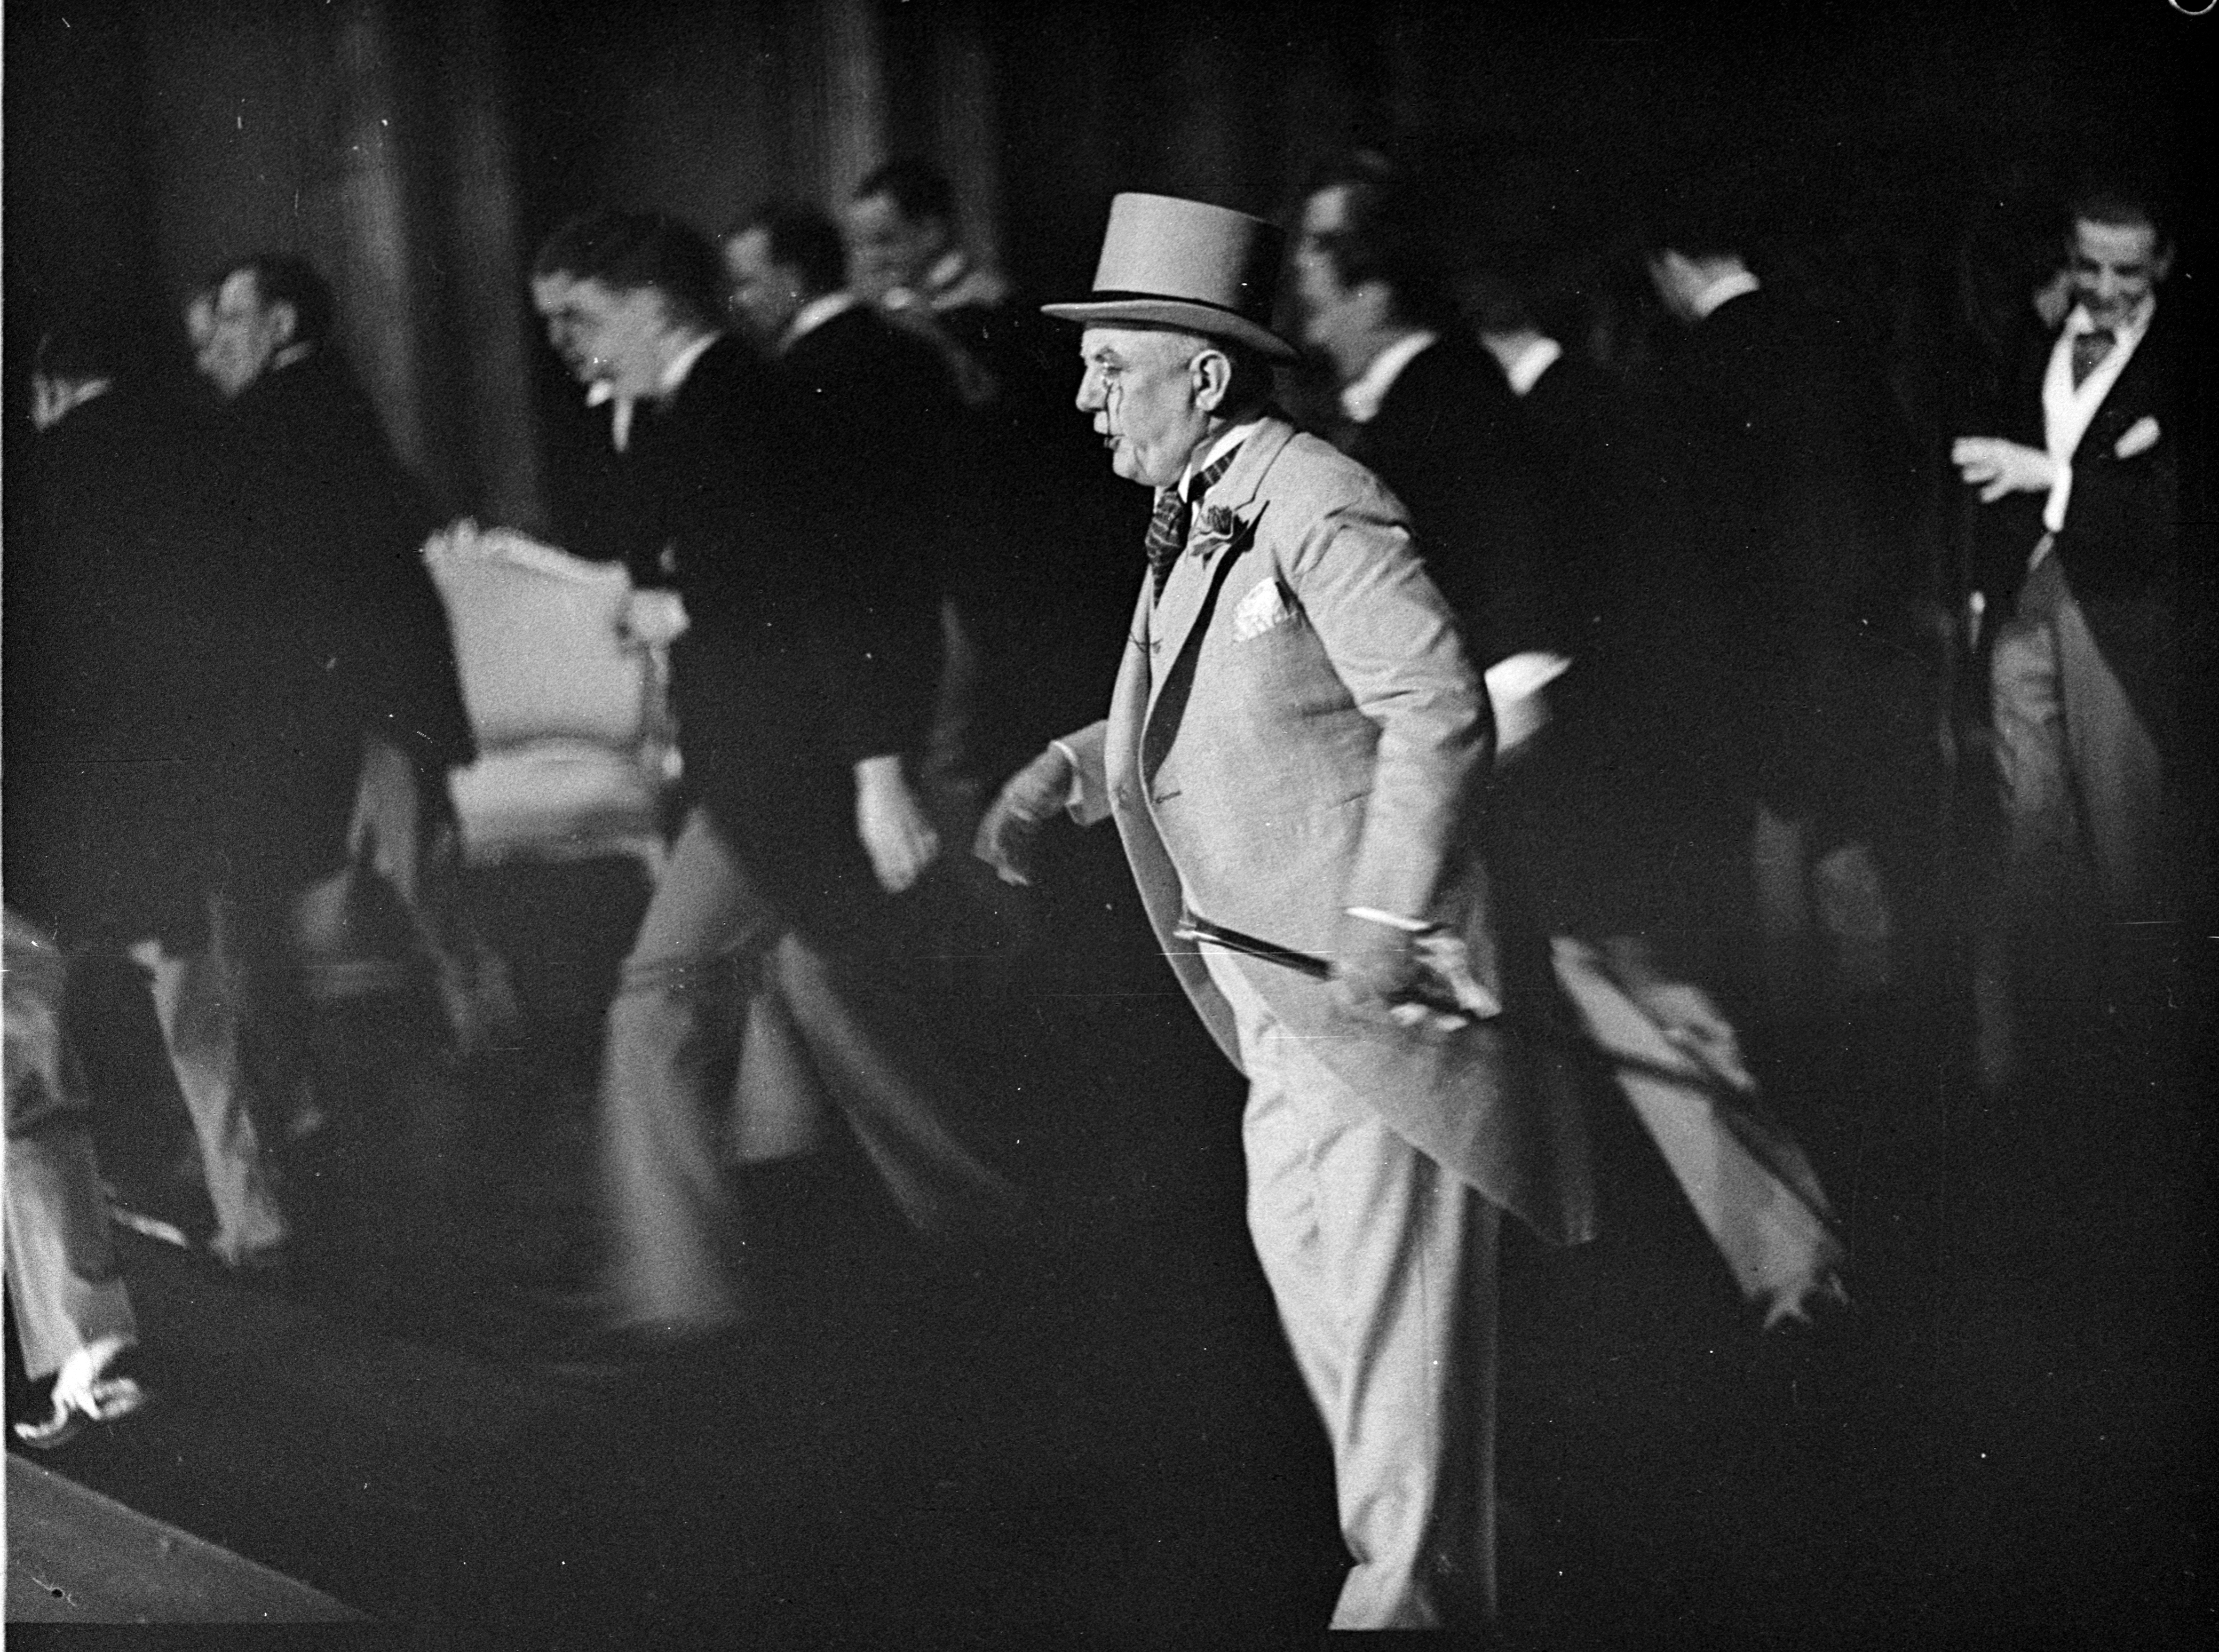 Man in a top hat JC Williamson Ltd, July 1936